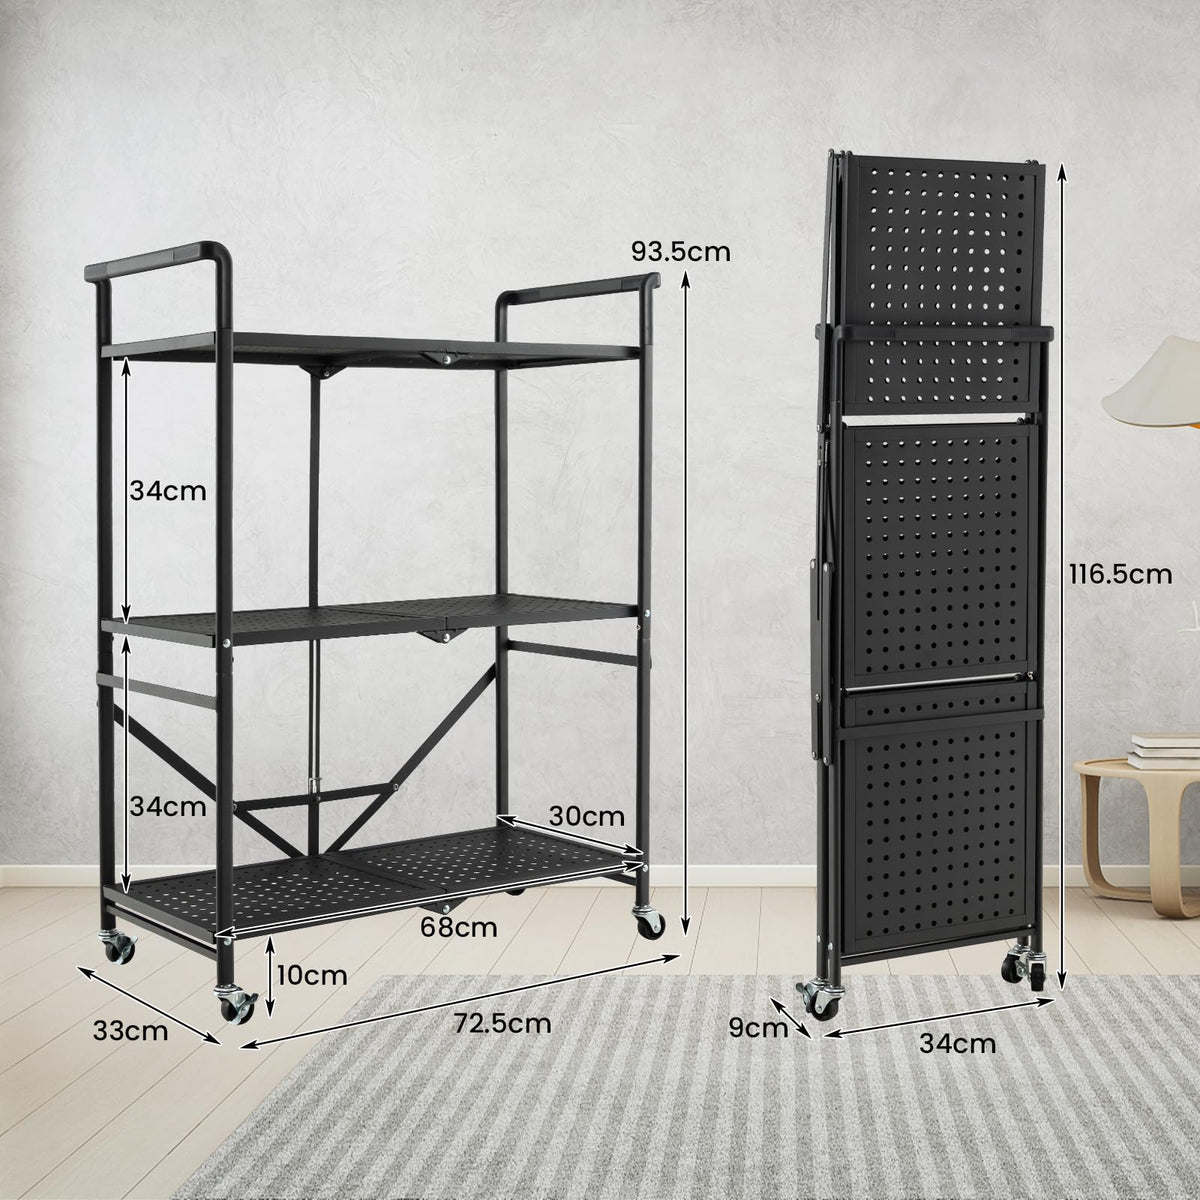 Giantex Foldable Storage Shelves on Wheels, 3-Tier Heavy-Duty Steel Rack with 2 Lockable Casters